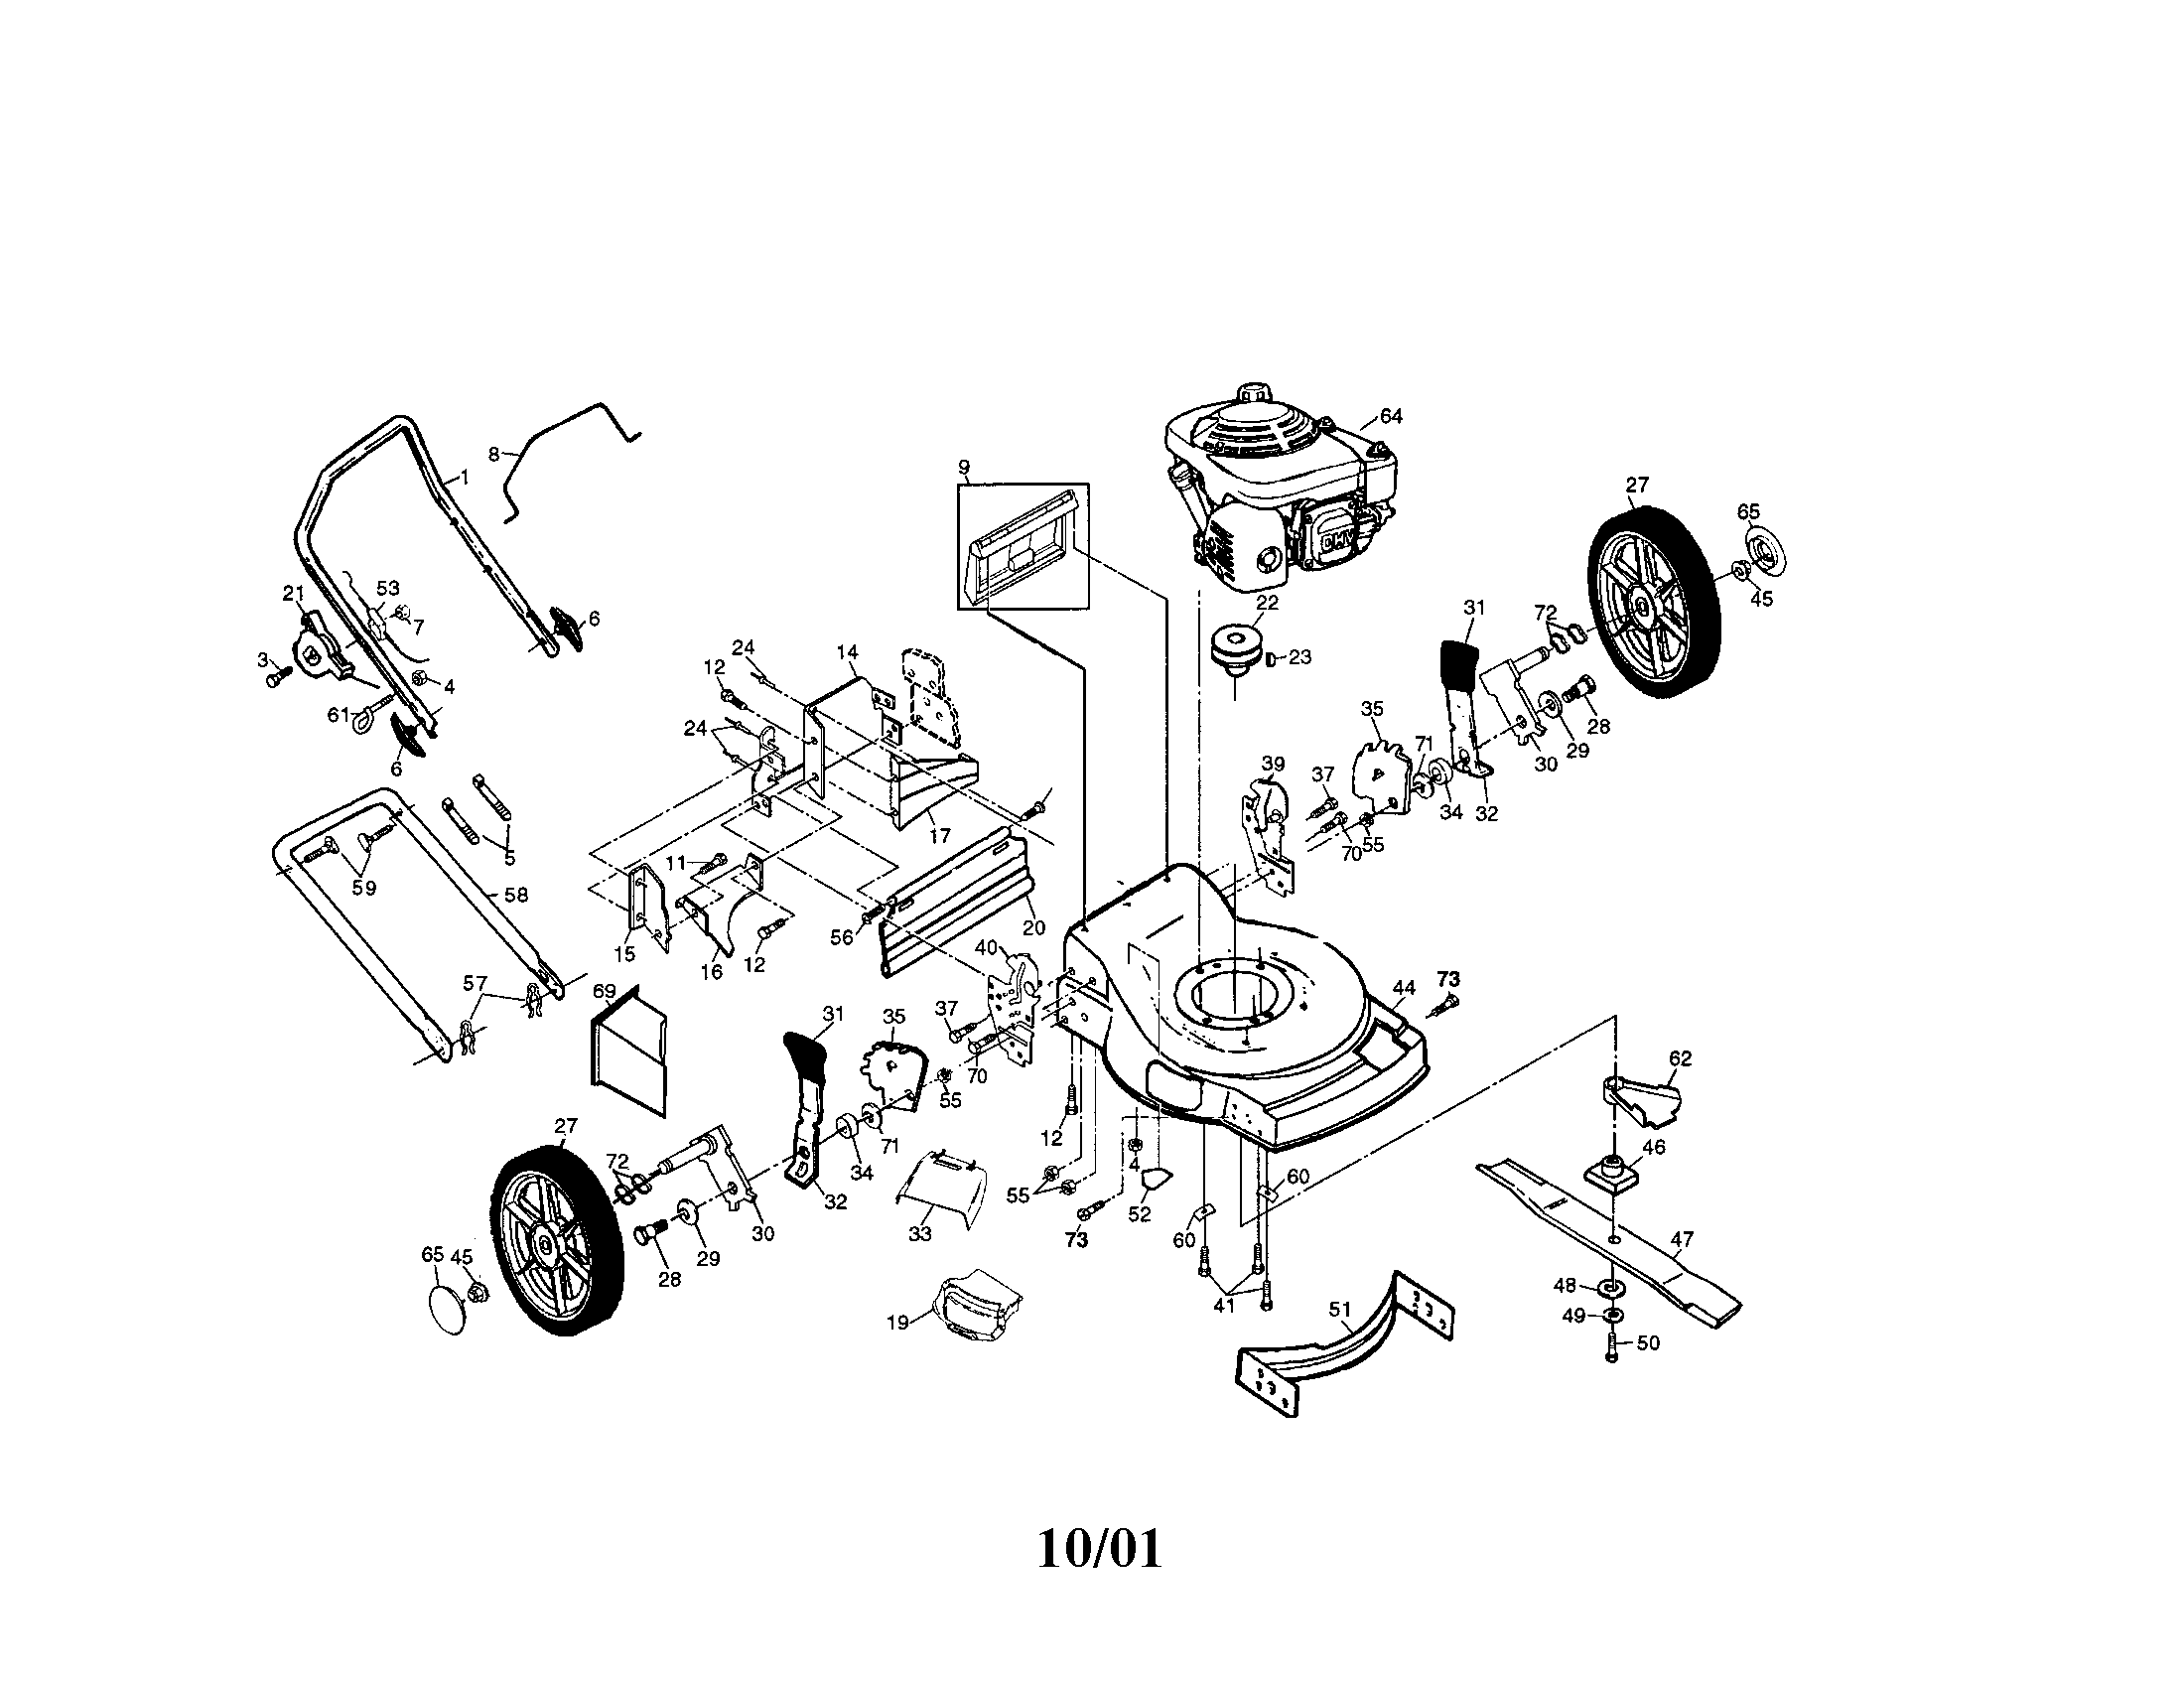 Honda poulan lawn mower manual #5